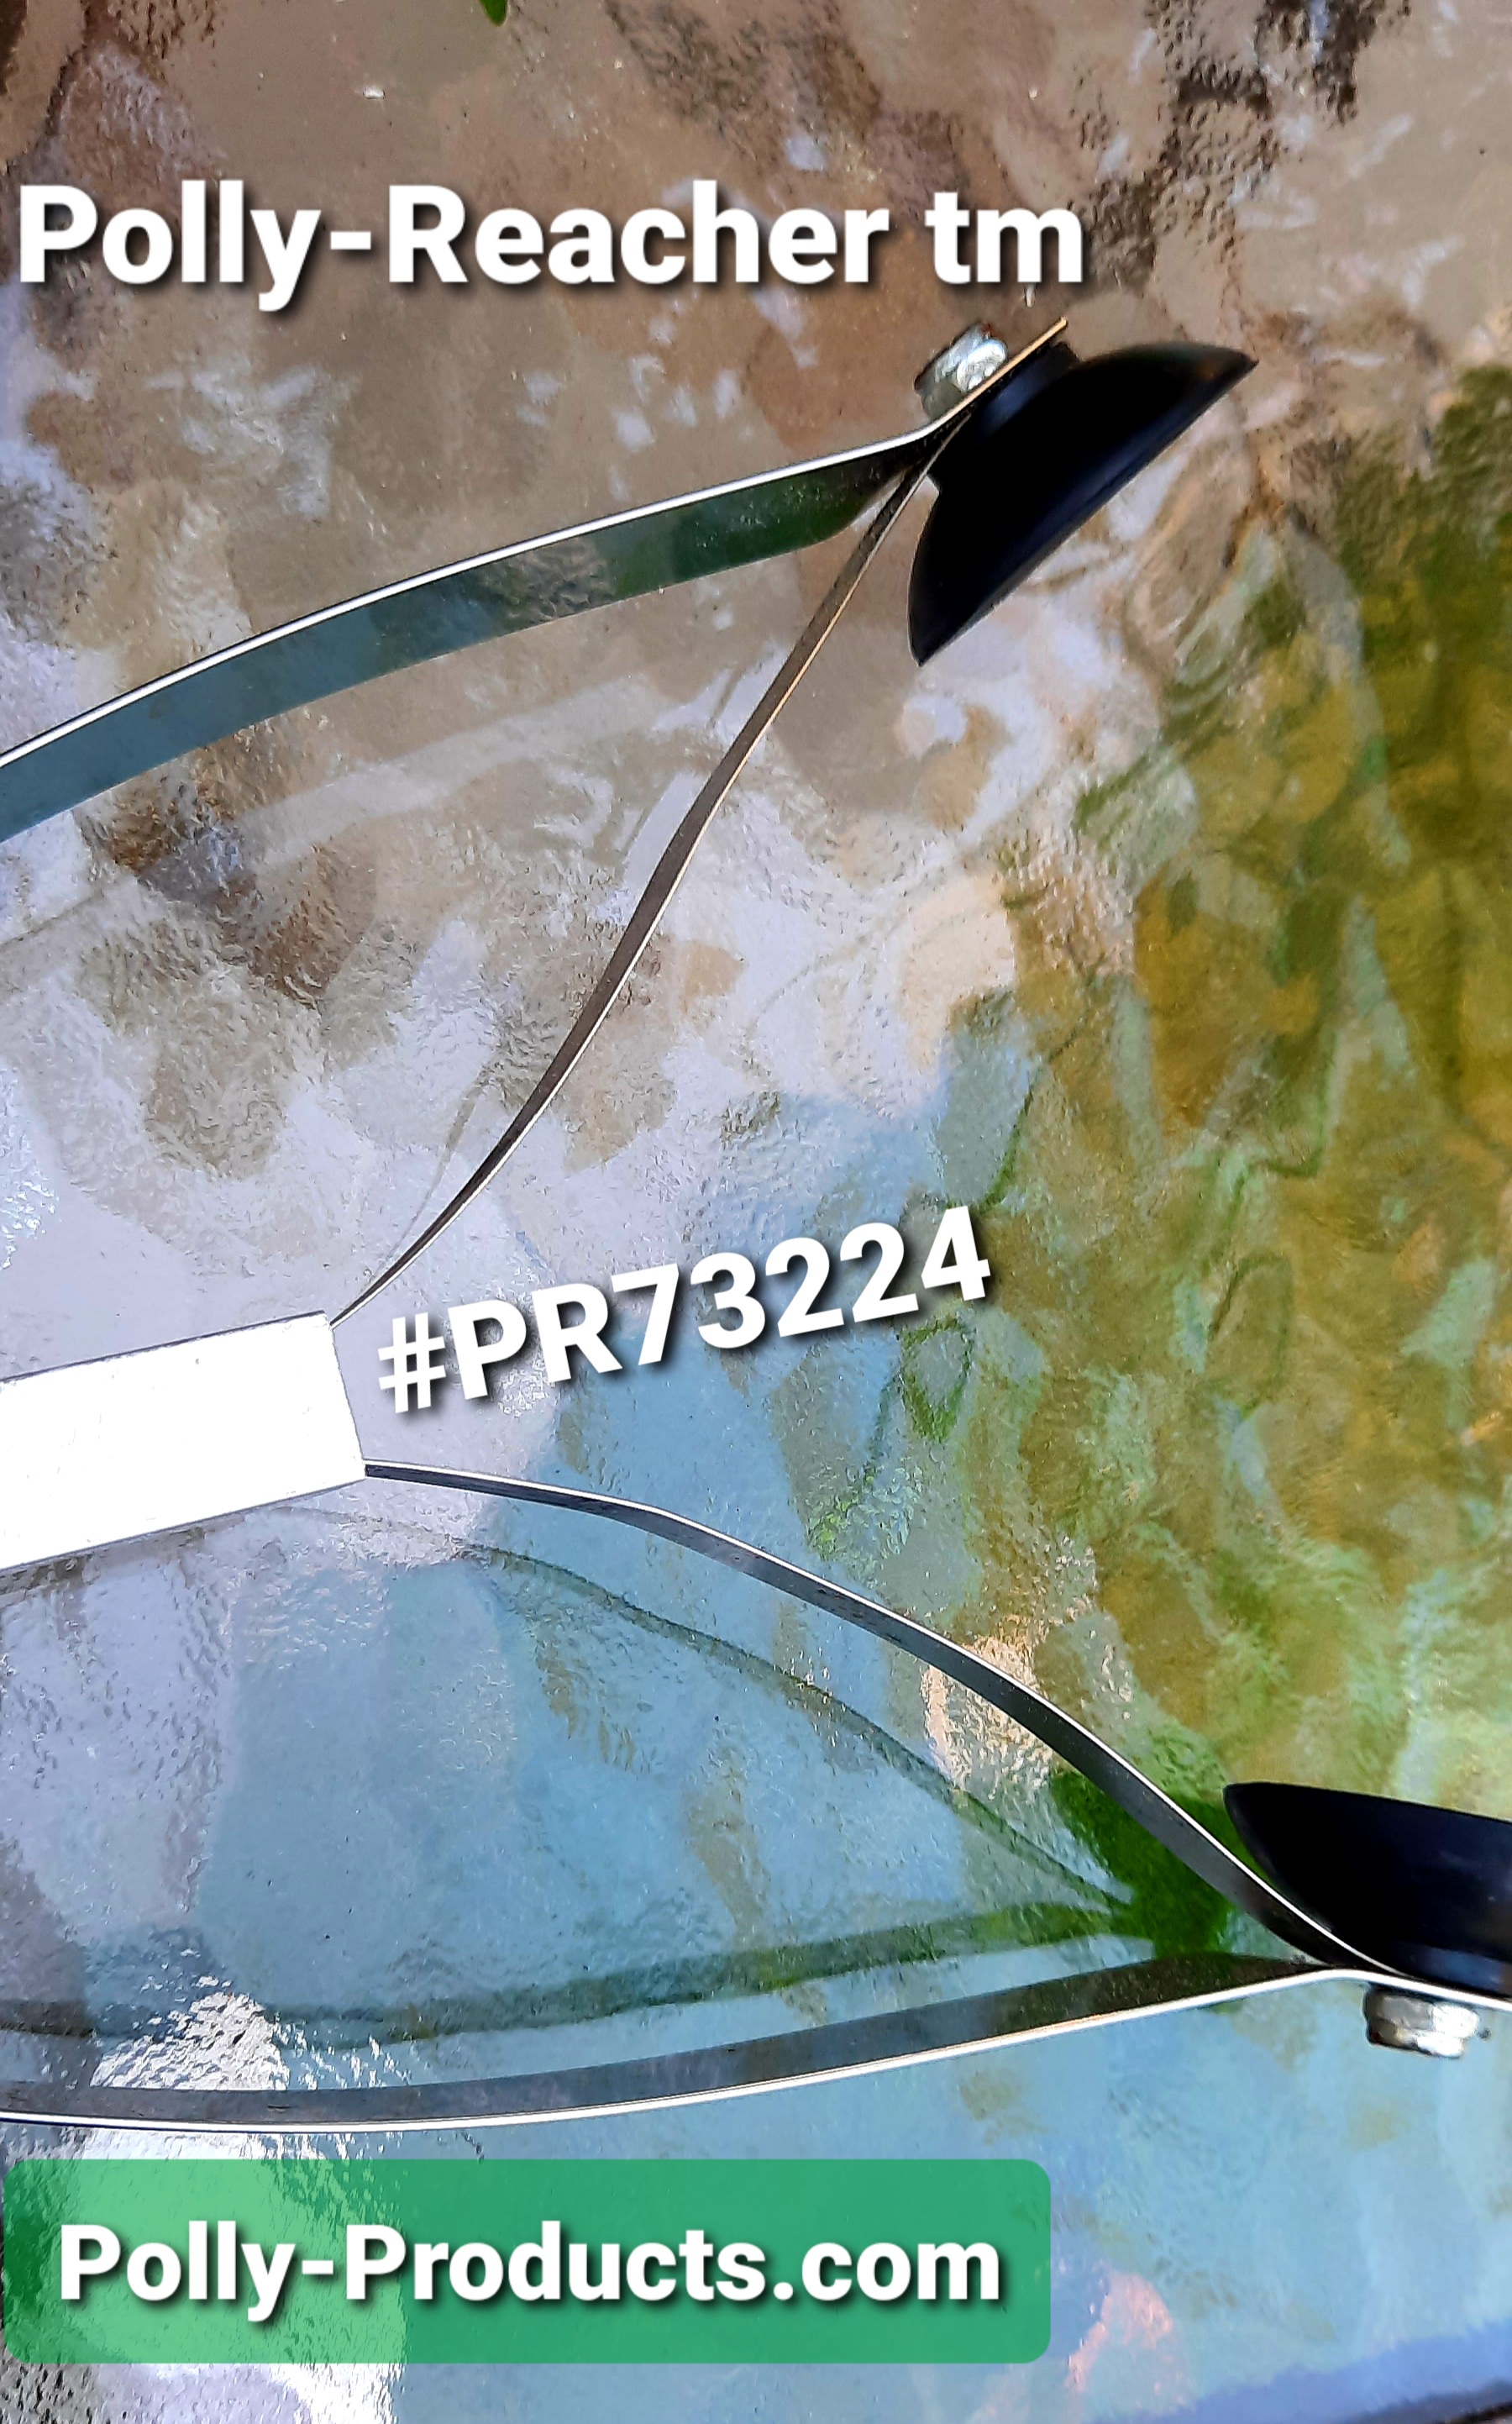 POLLY PRODUCTS COMPANY POLLY-REACHER tm #PR73224 